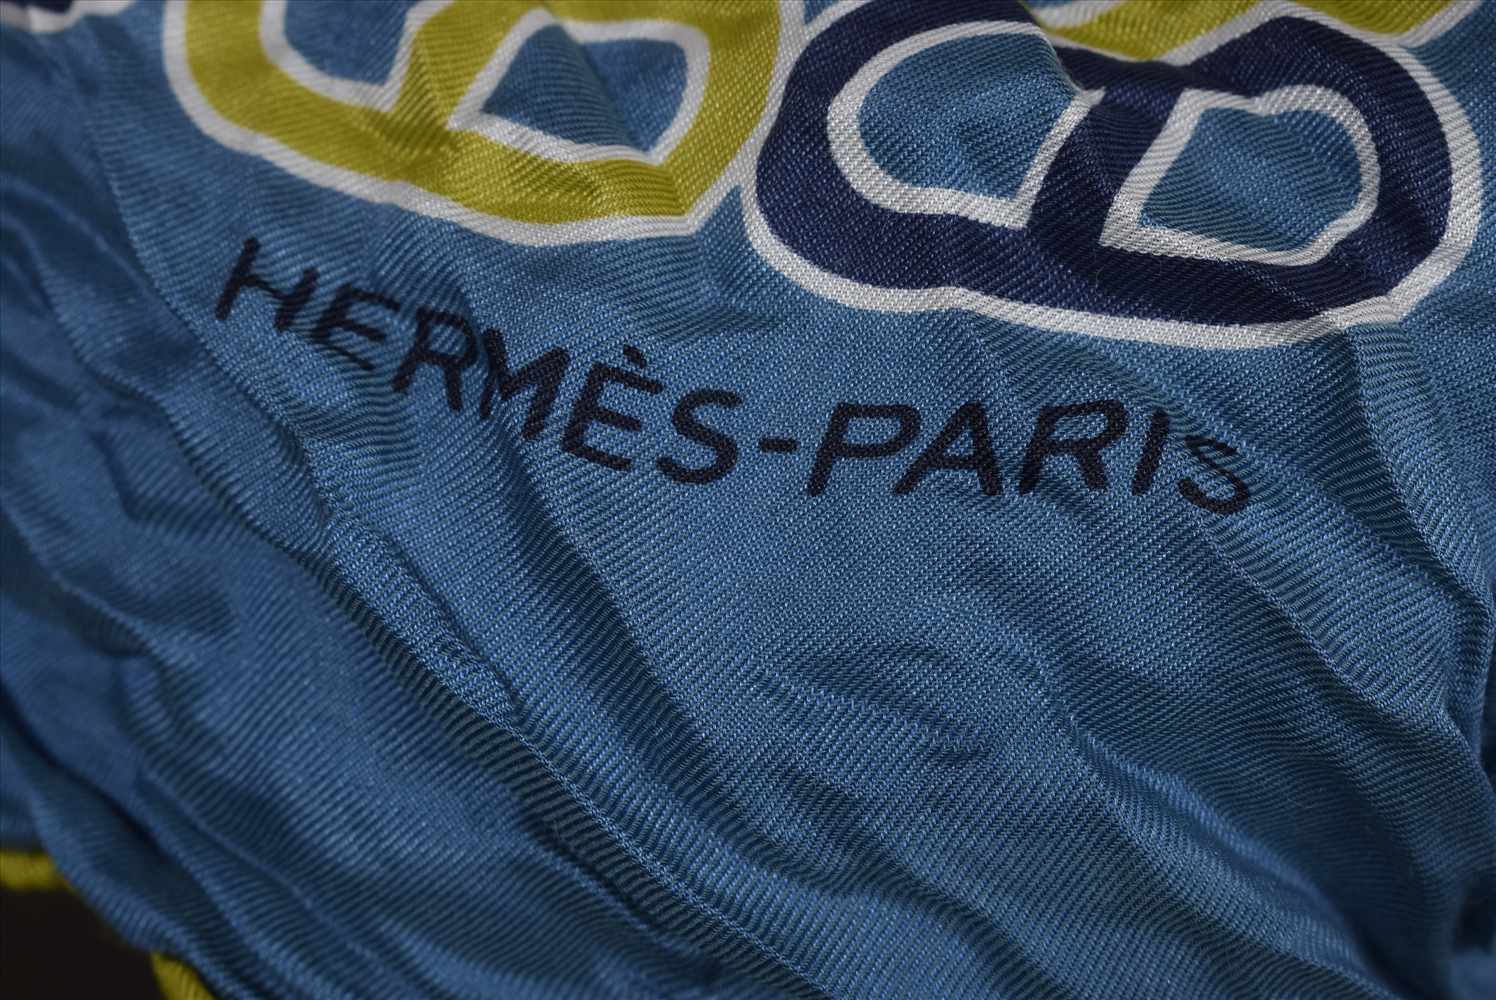 Hermès Seiden Carré in blau/gelb/grau, gekreppt, in Original Karton, ca. 130x135cm, - Image 3 of 3